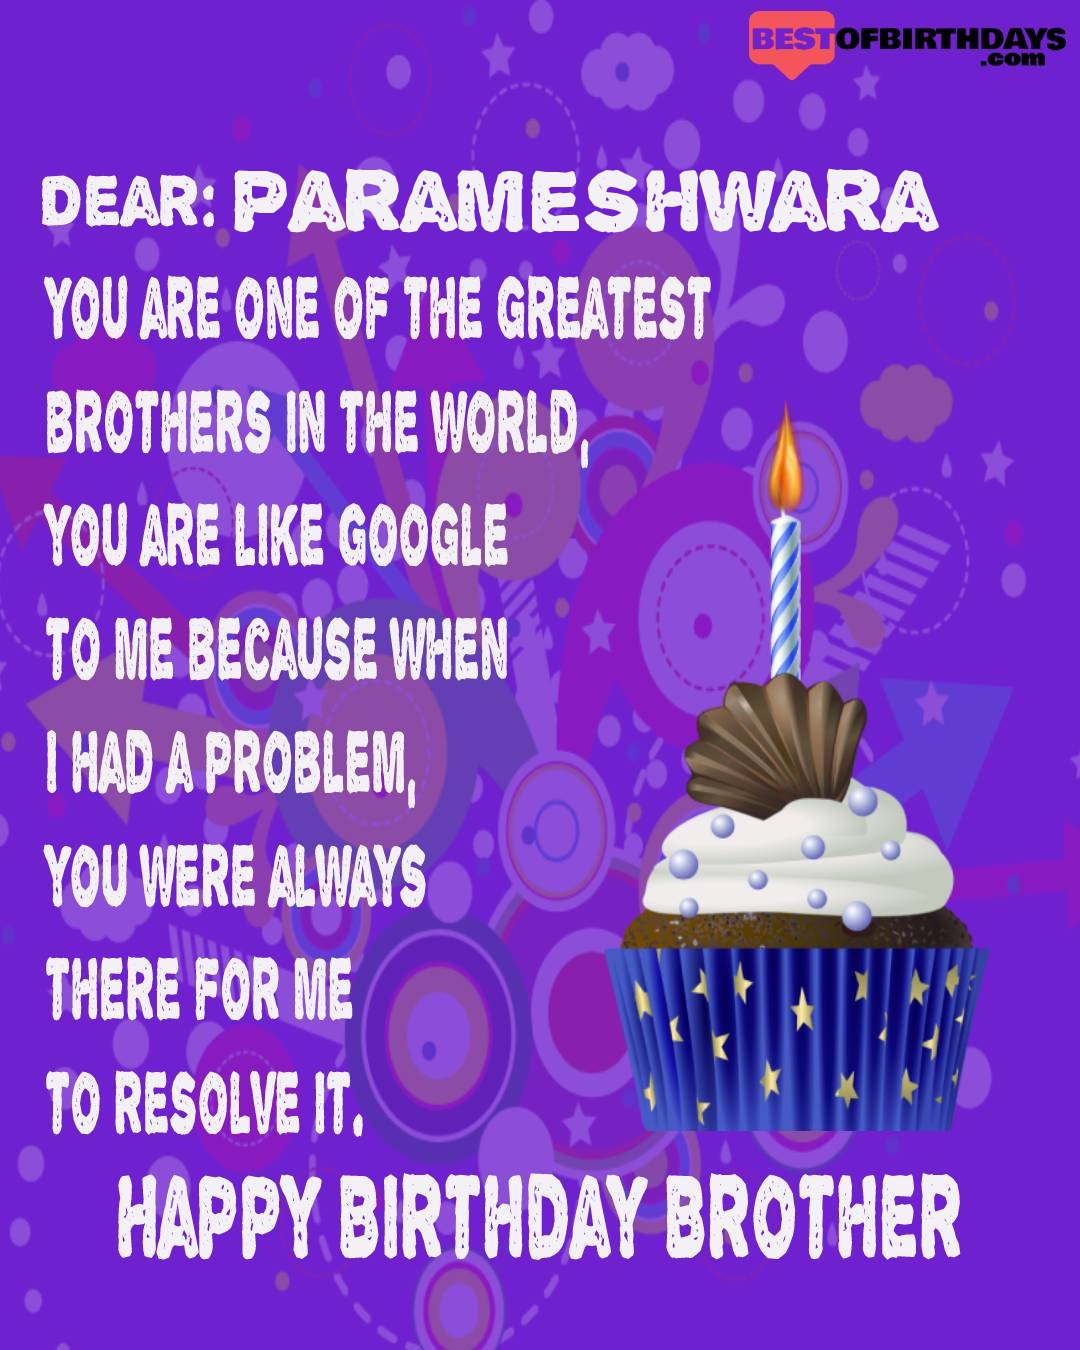 Happy birthday parameshwara bhai brother bro